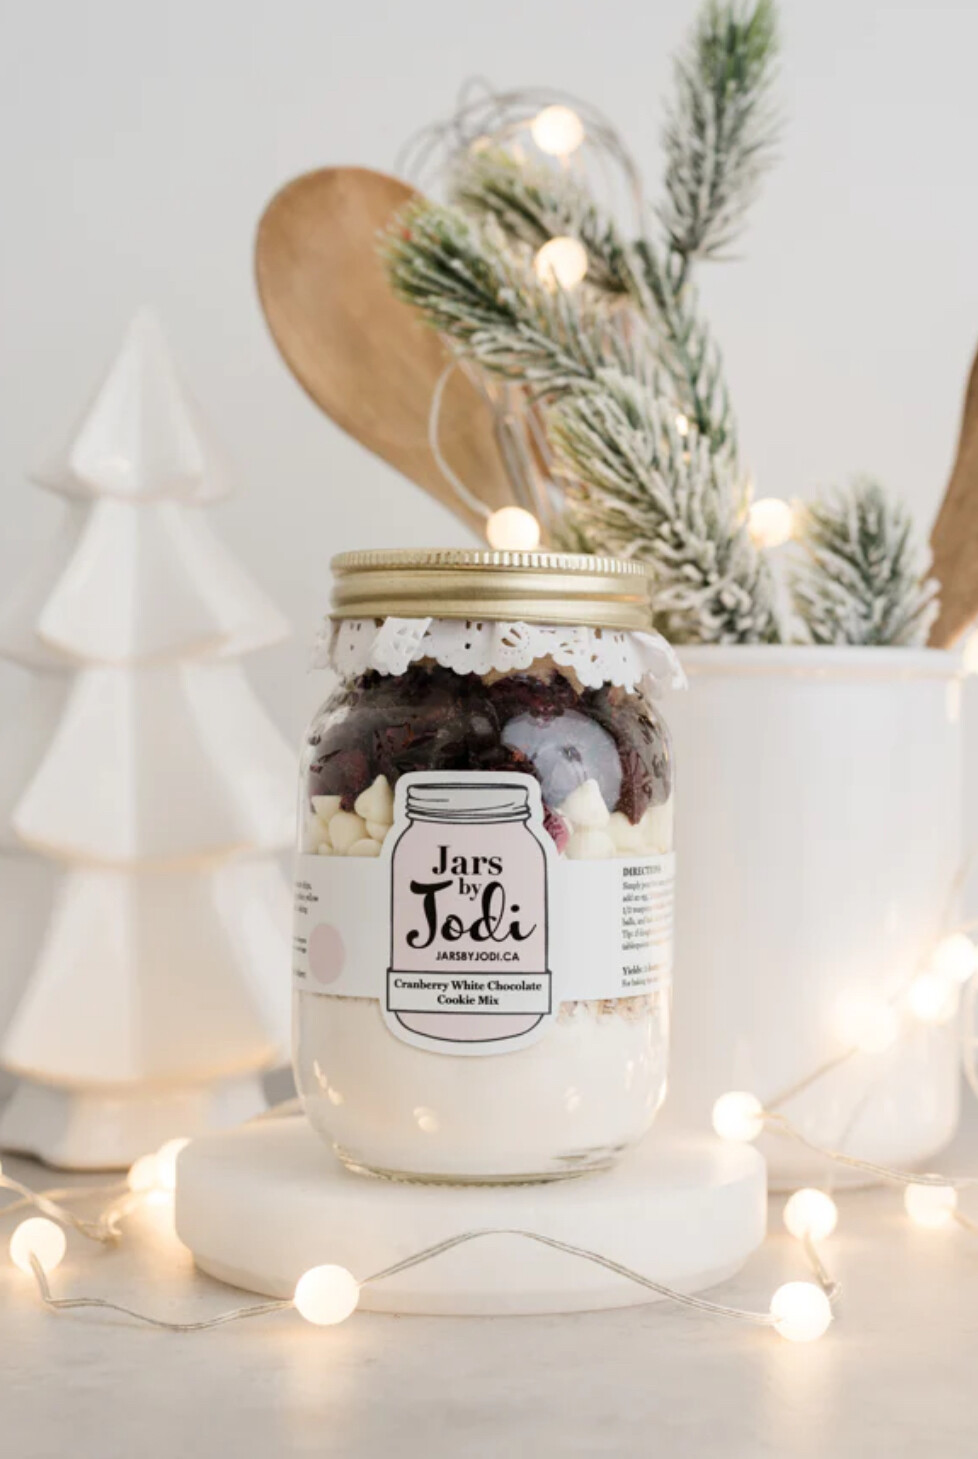 Jars by Jodi Cranberry White Chocolate Cookie Mix